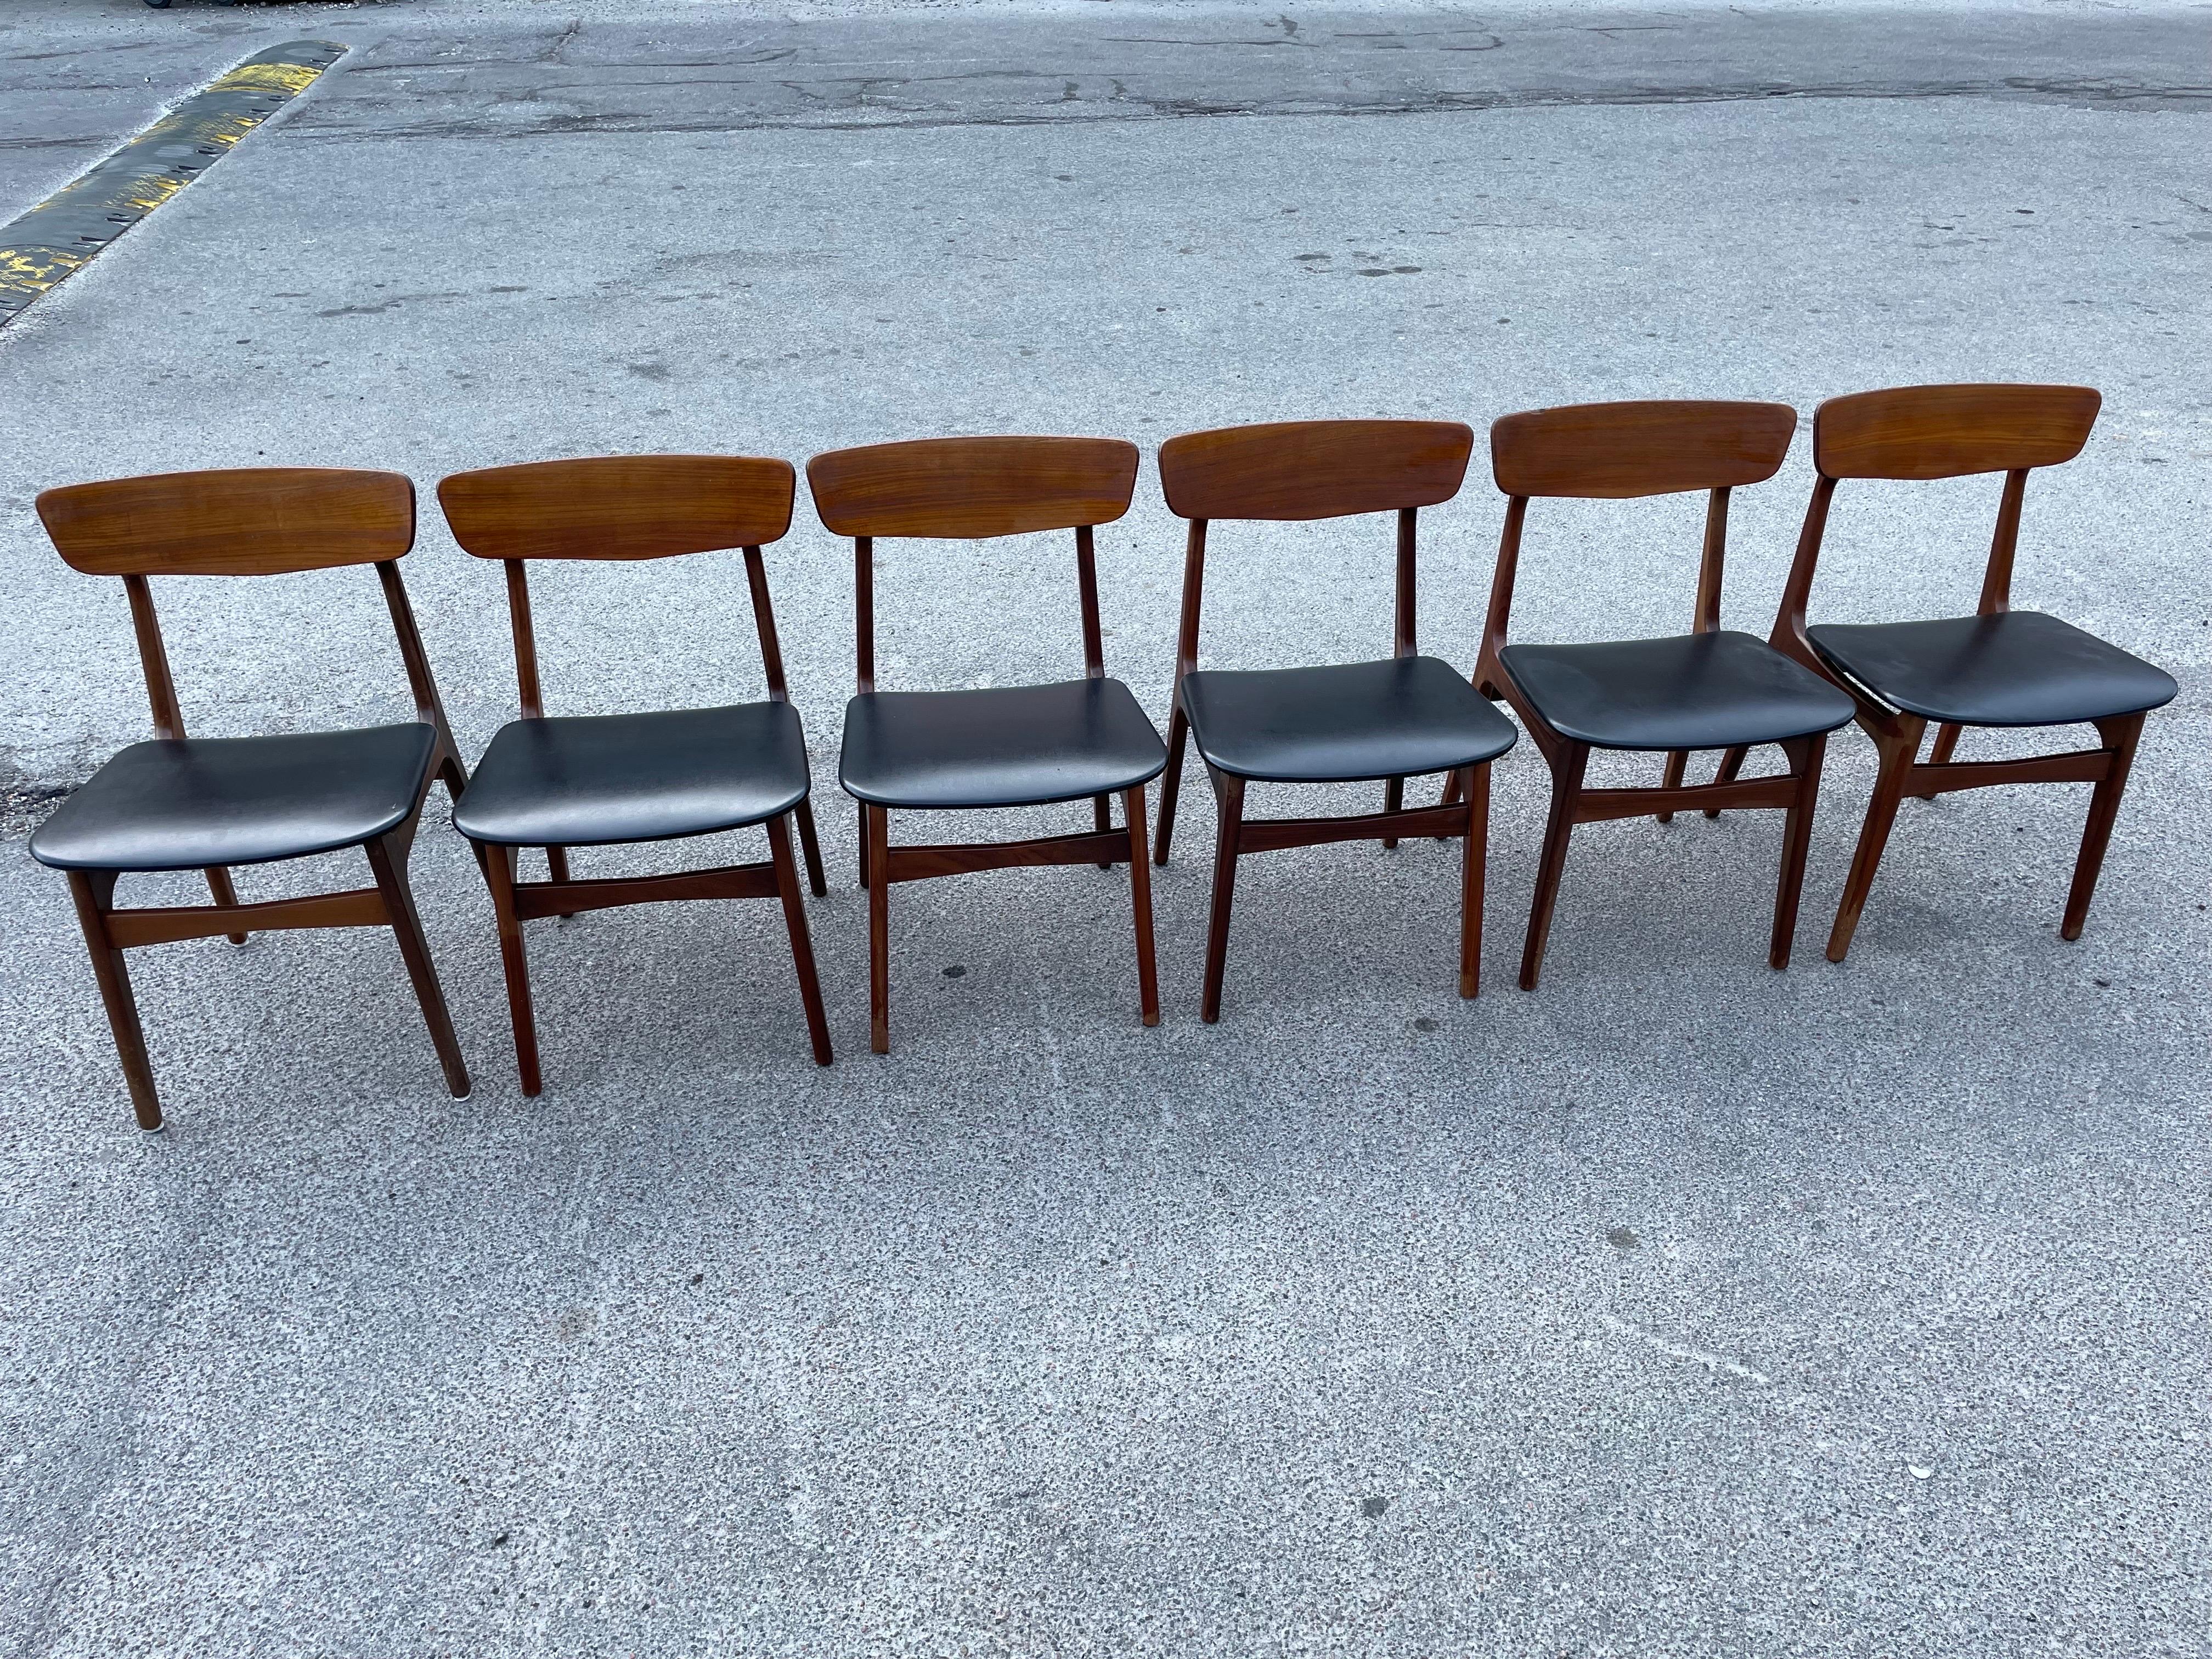 Set of 6 Midcentury Danish Chairs in Teak by Schiønning & Elgaard, 1960s For Sale 4